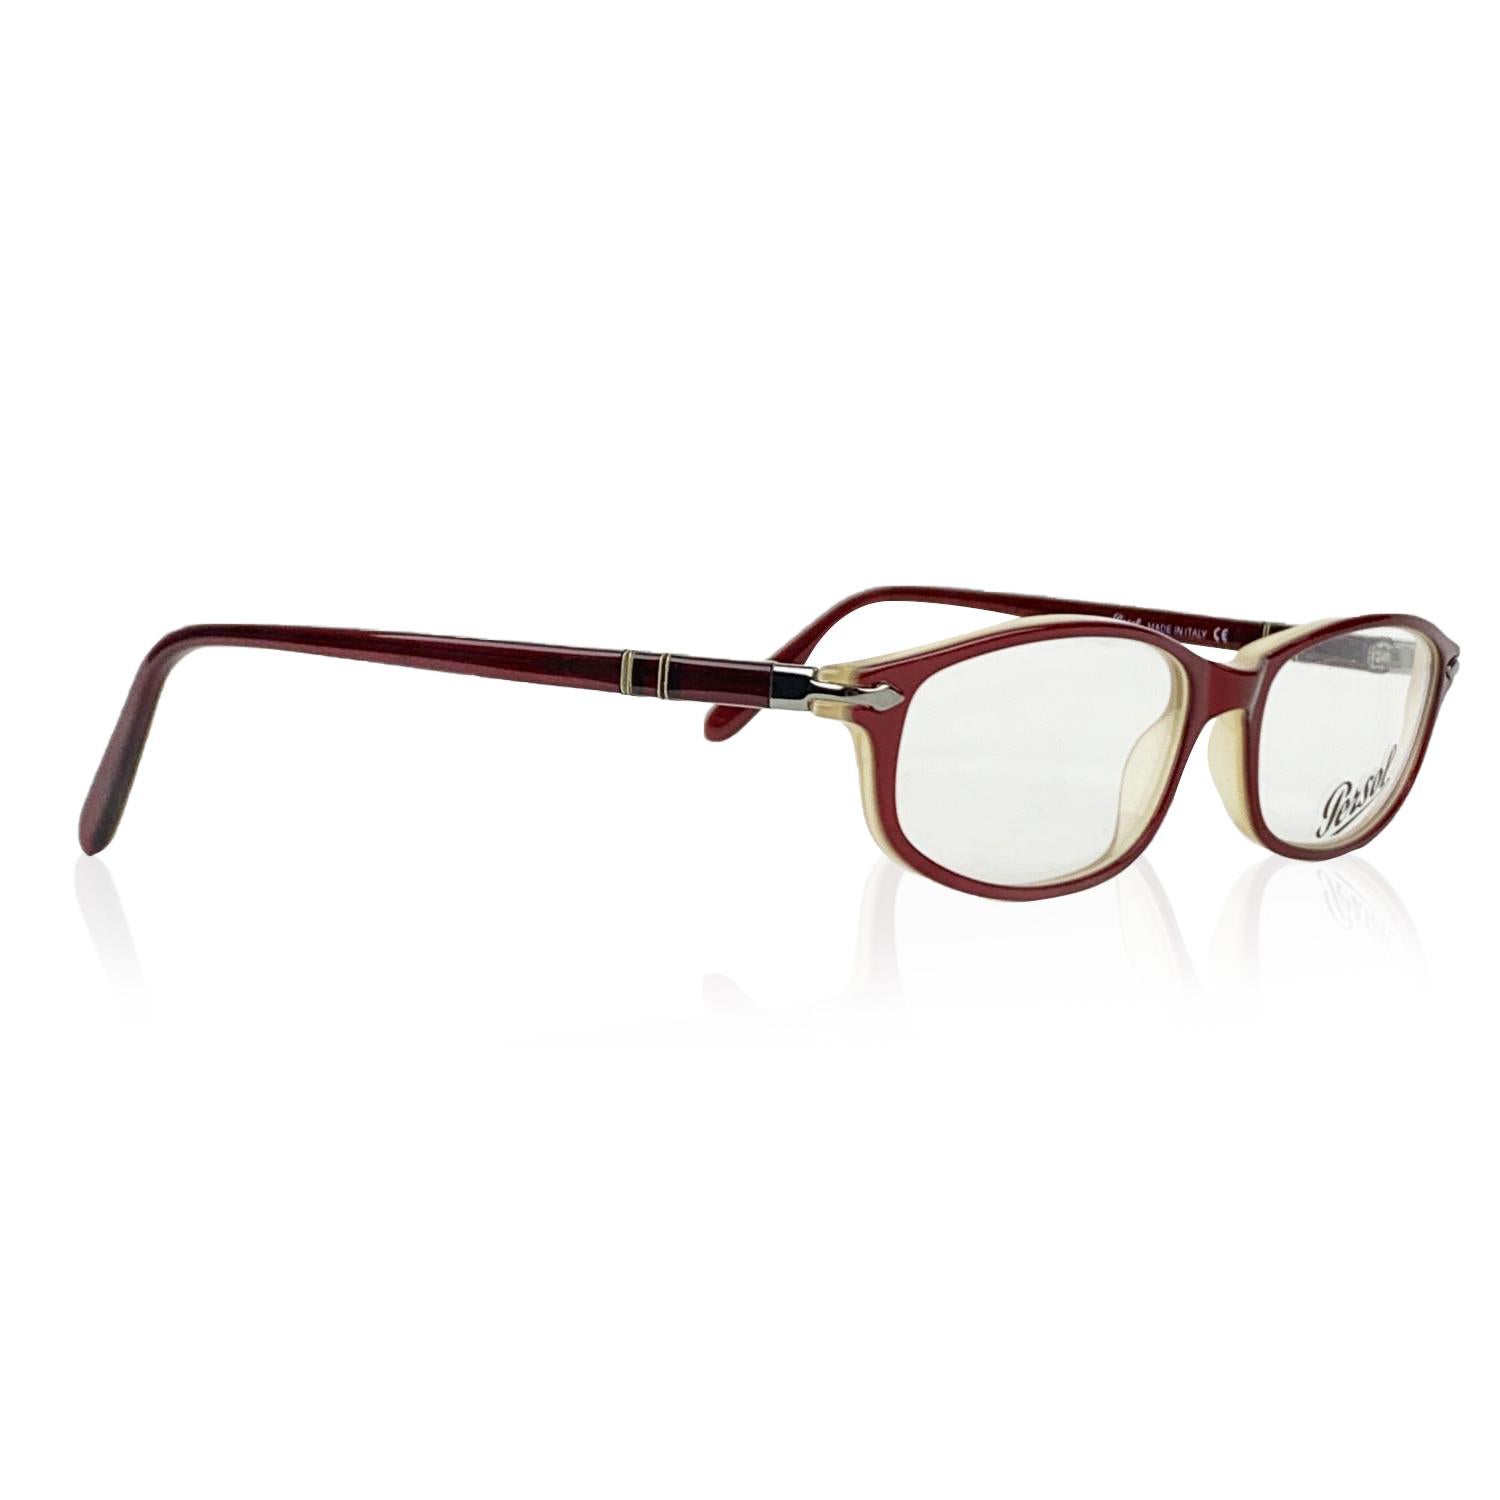 PERSOL Vintage Eyeglasses- Model: 2592-V. Red acetate frame. Clear demo lenses. Flexible temples. Made in Italy. Style & Refs: 2592-V - 51/16 - 218 - 135



Details

MATERIAL: Acetate

COLOR: Red

MODEL: 2592-V - 218

GENDER: Unisex Adults

COUNTRY